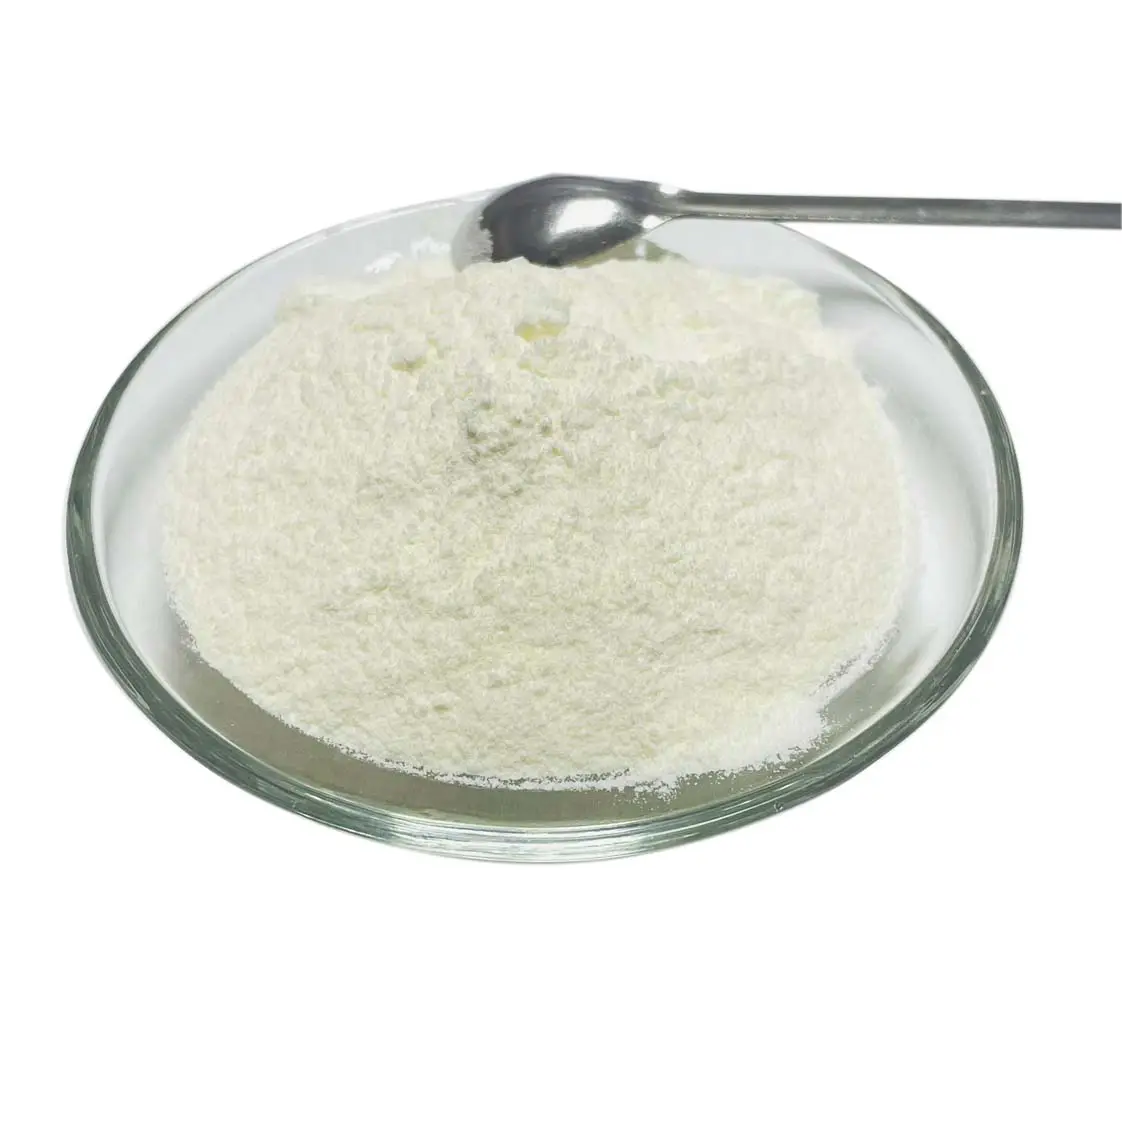 Direct supply Wholesale Price CAS 22839-47-0 Aspartame Powder Additives Aspartame 99%